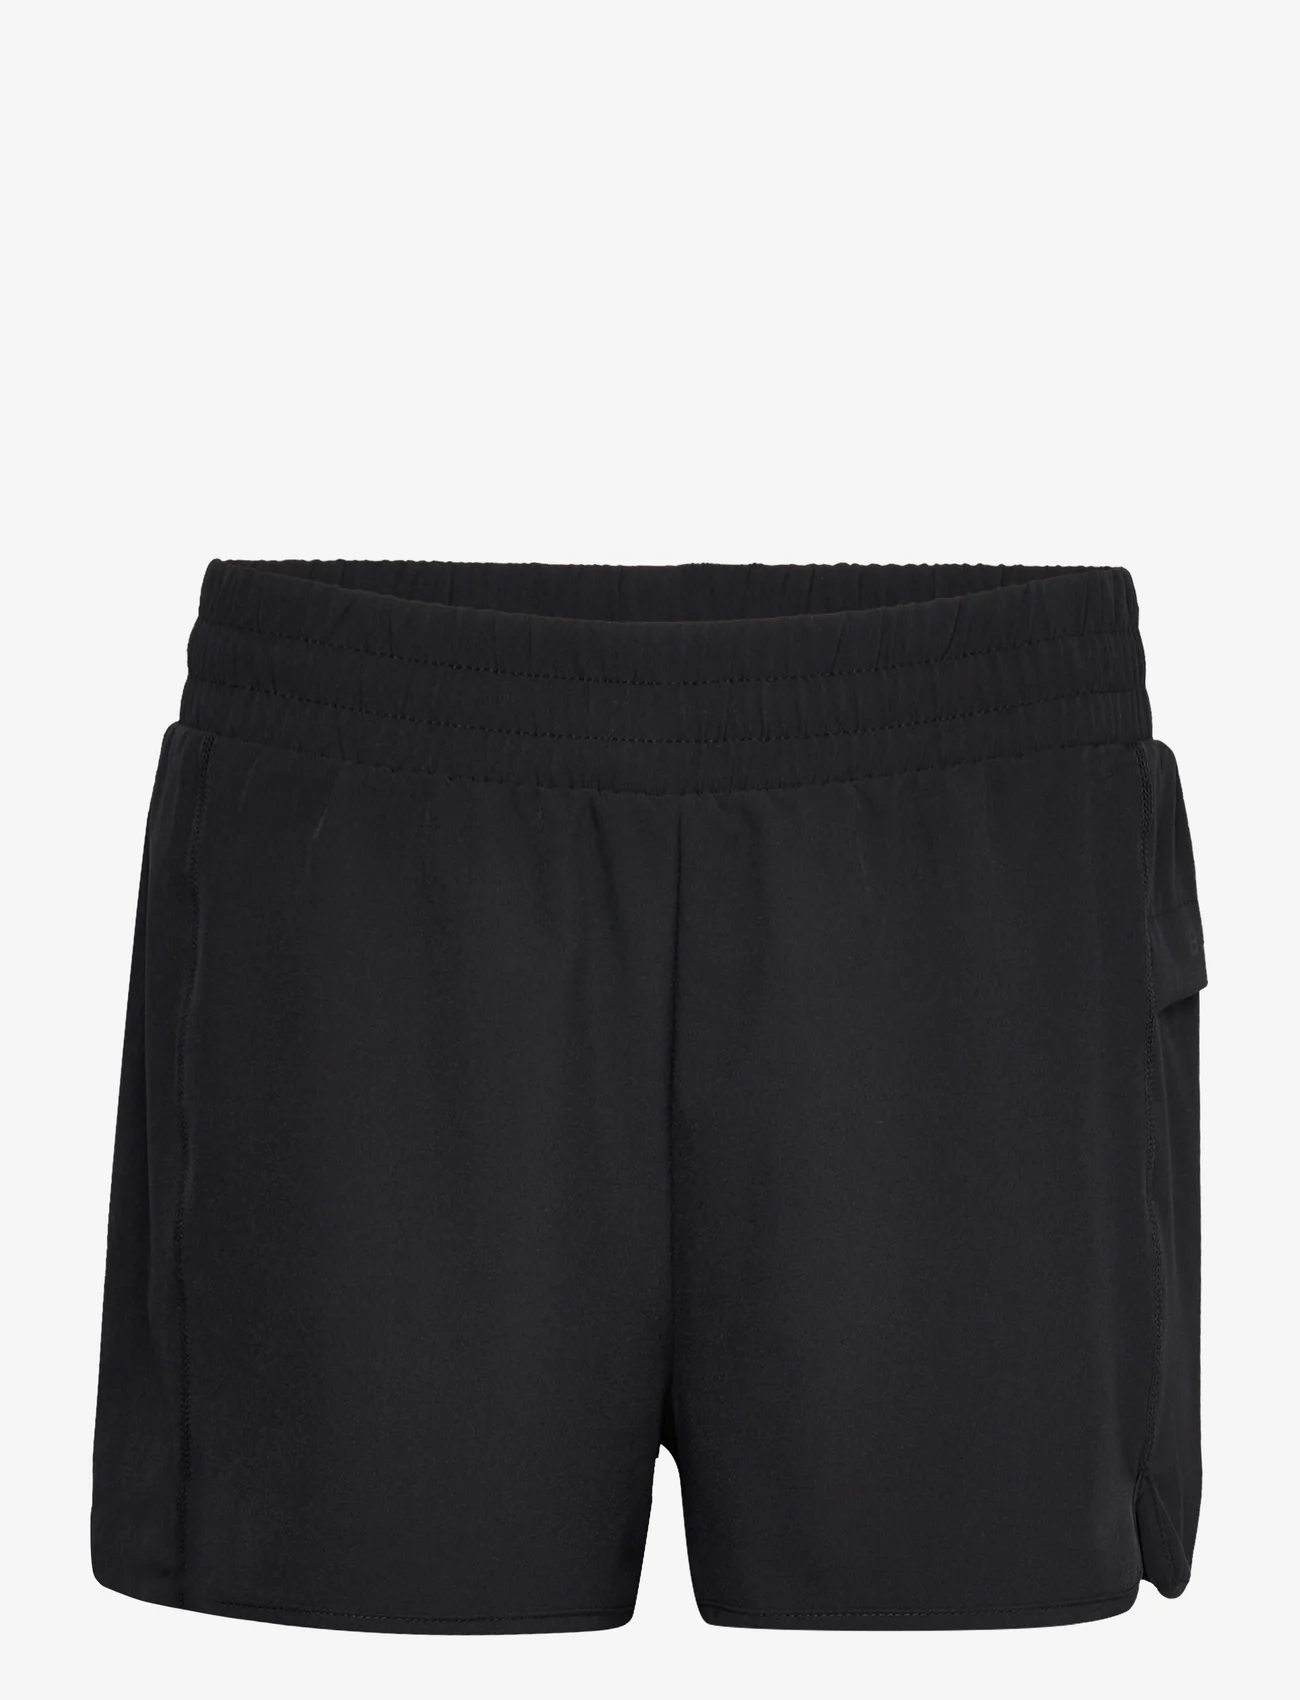 Björn Borg - BORG LOOSE SHORTS - sports shorts - black beauty - 0